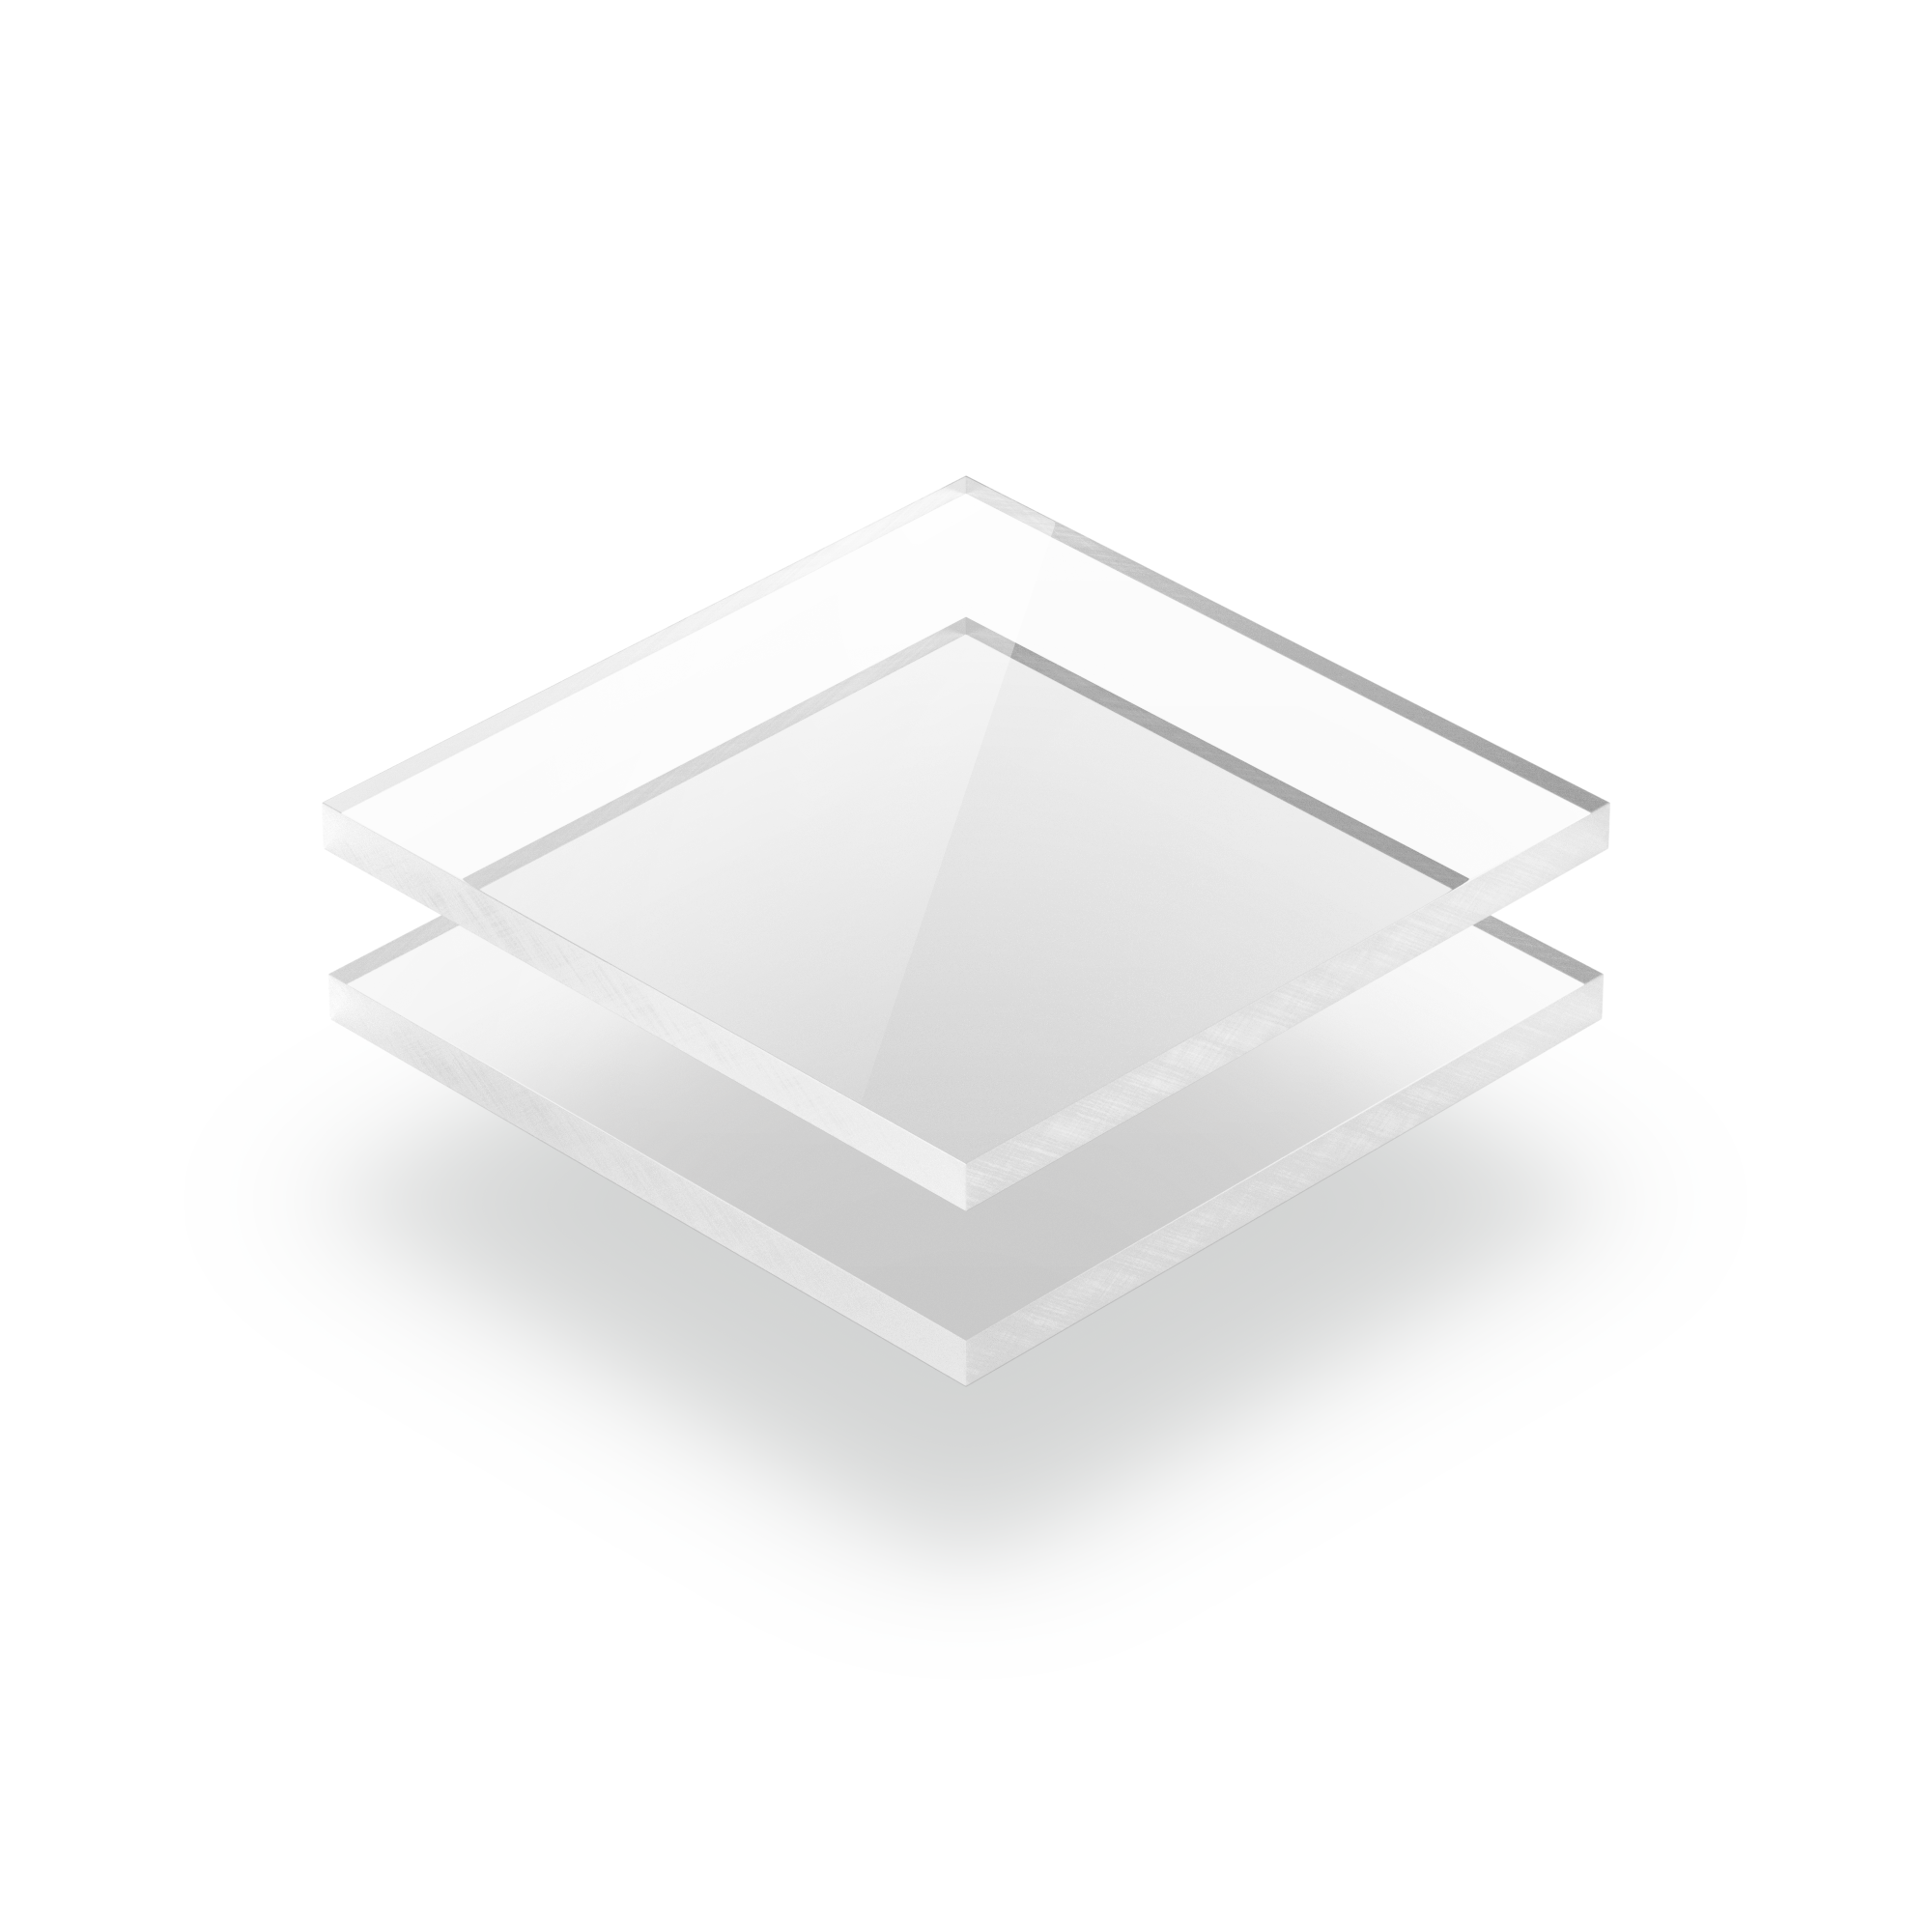 Plexiglass 4mm sur mesure envoi rapide